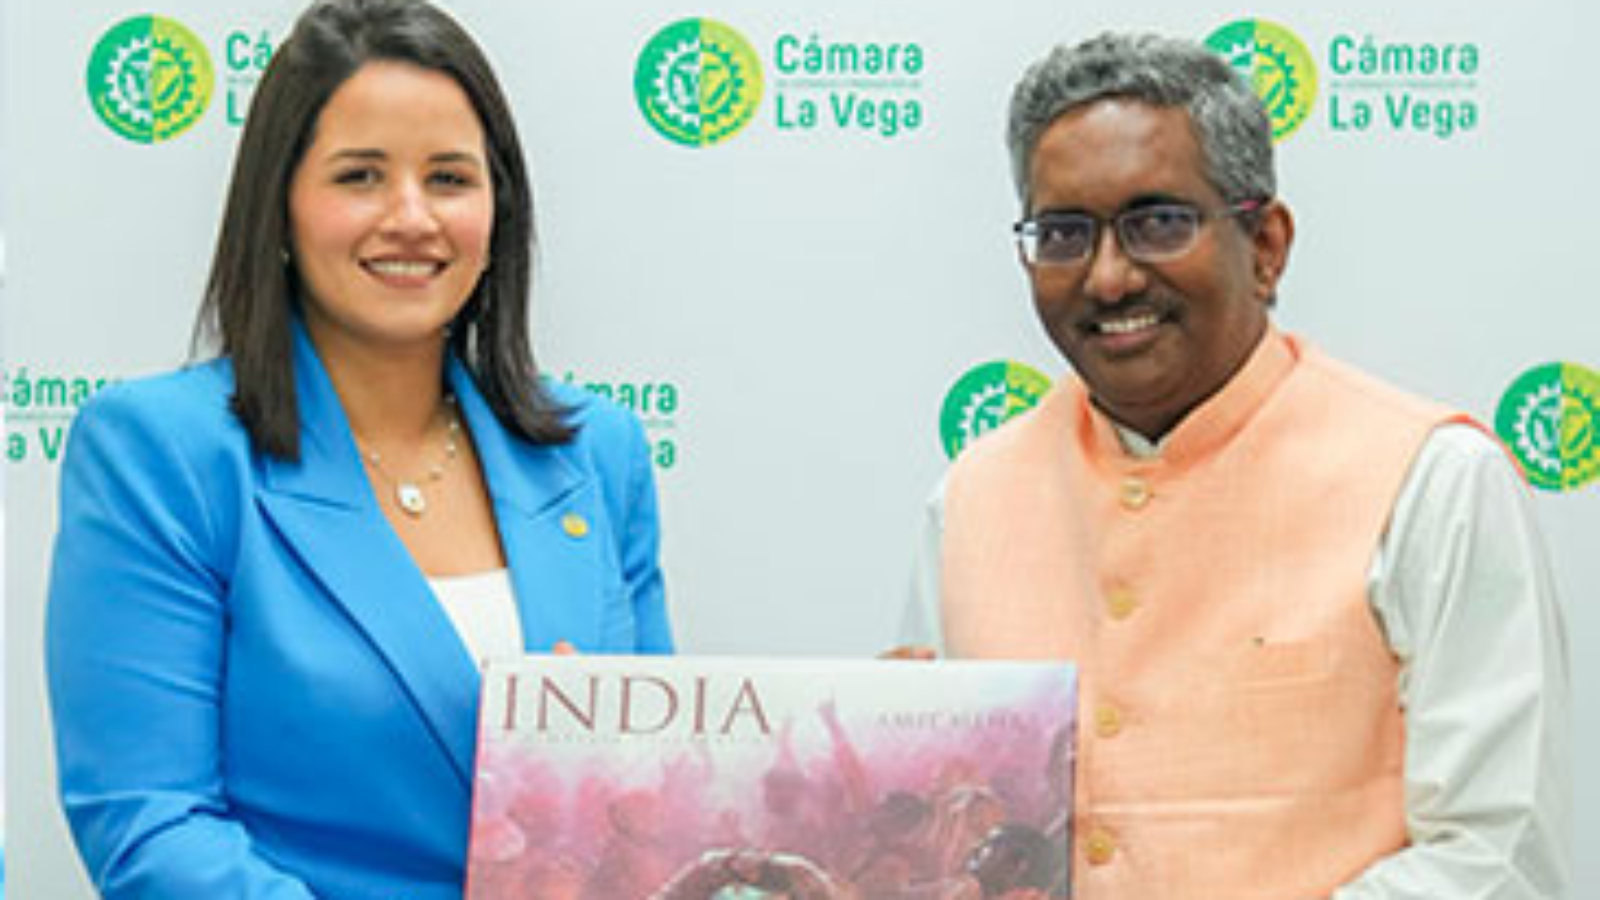 Portada Visita del Embajador de la India a la Camara de Comercio de La Vega